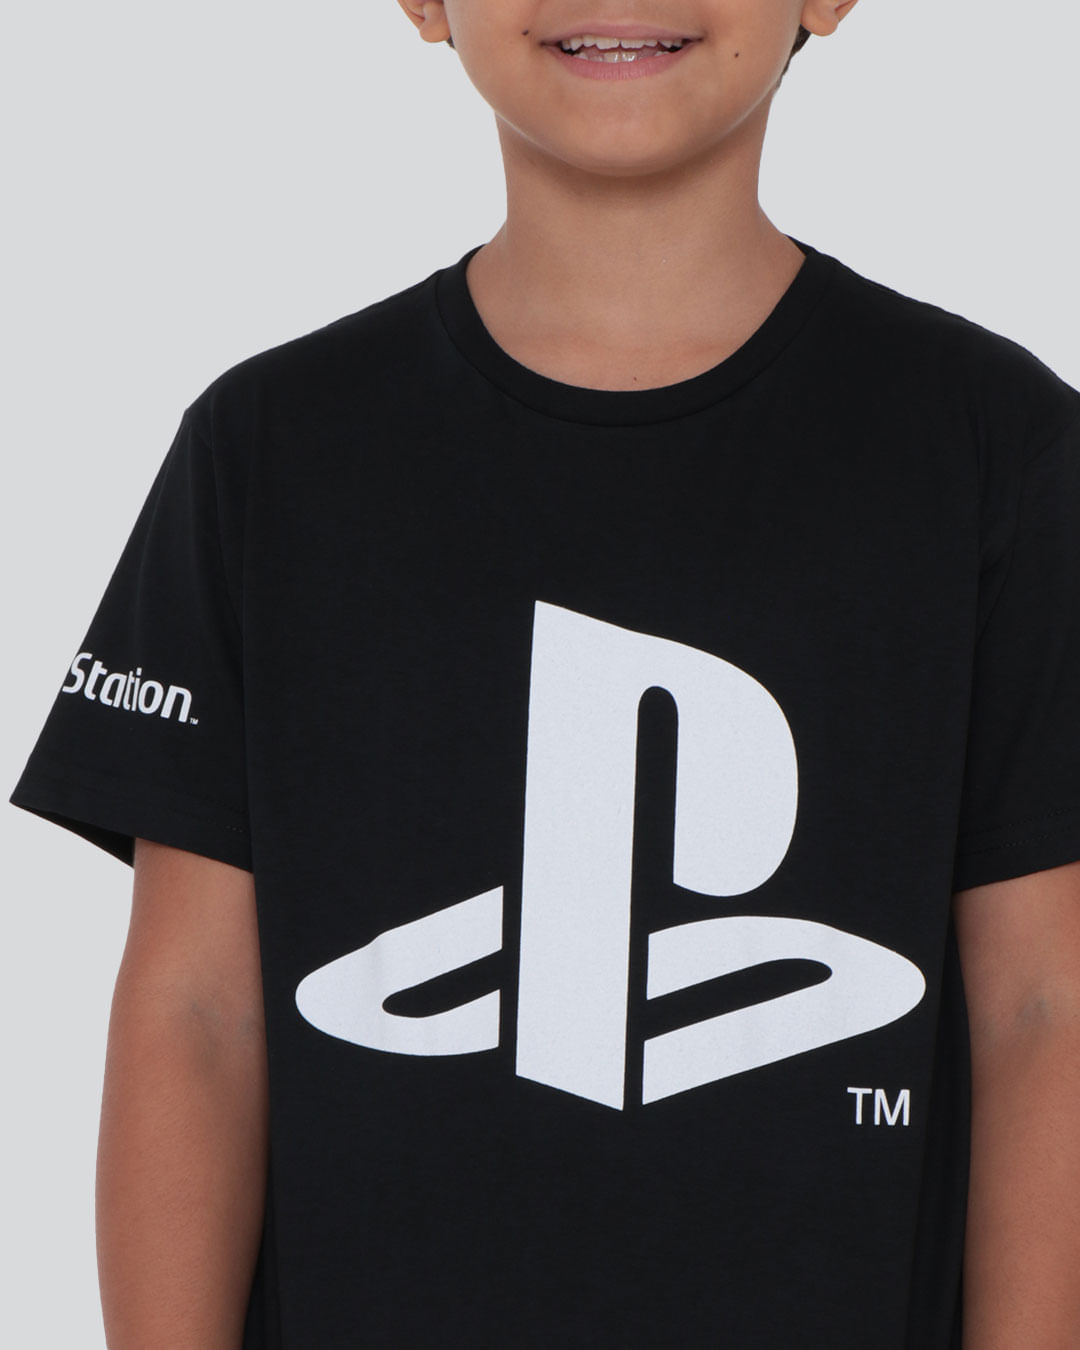 Camiseta-Infantil-Playstation-Preta